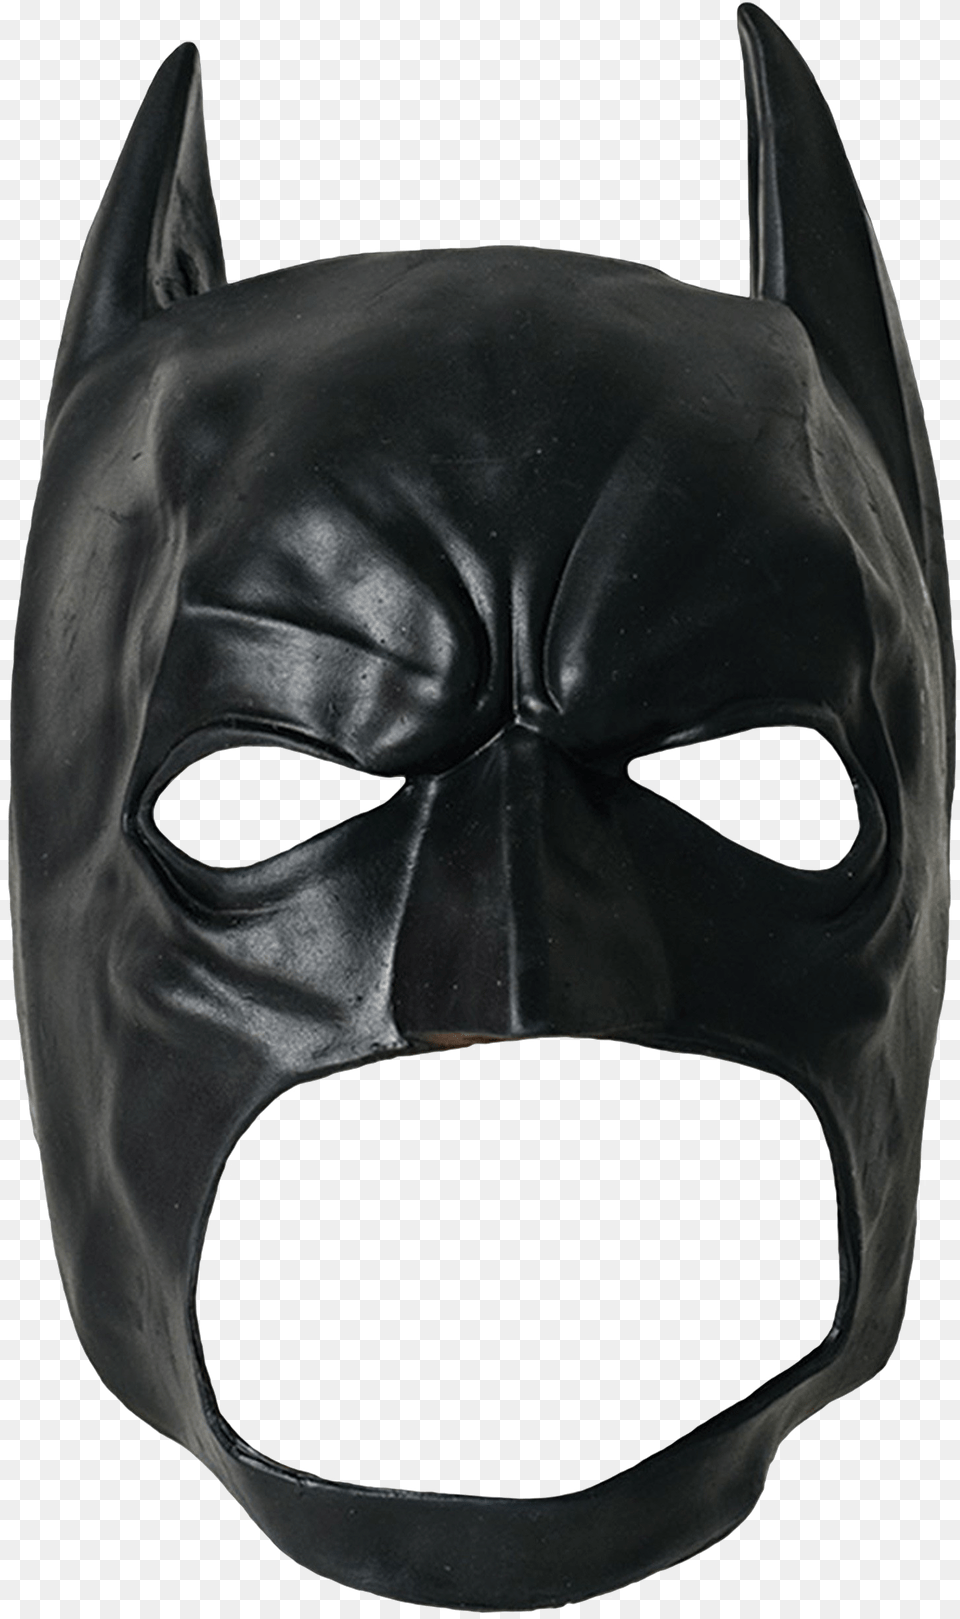 Batman Scarecrow Joker Mask Costume Batman Adult Masks, Animal, Fish, Sea Life, Shark Png